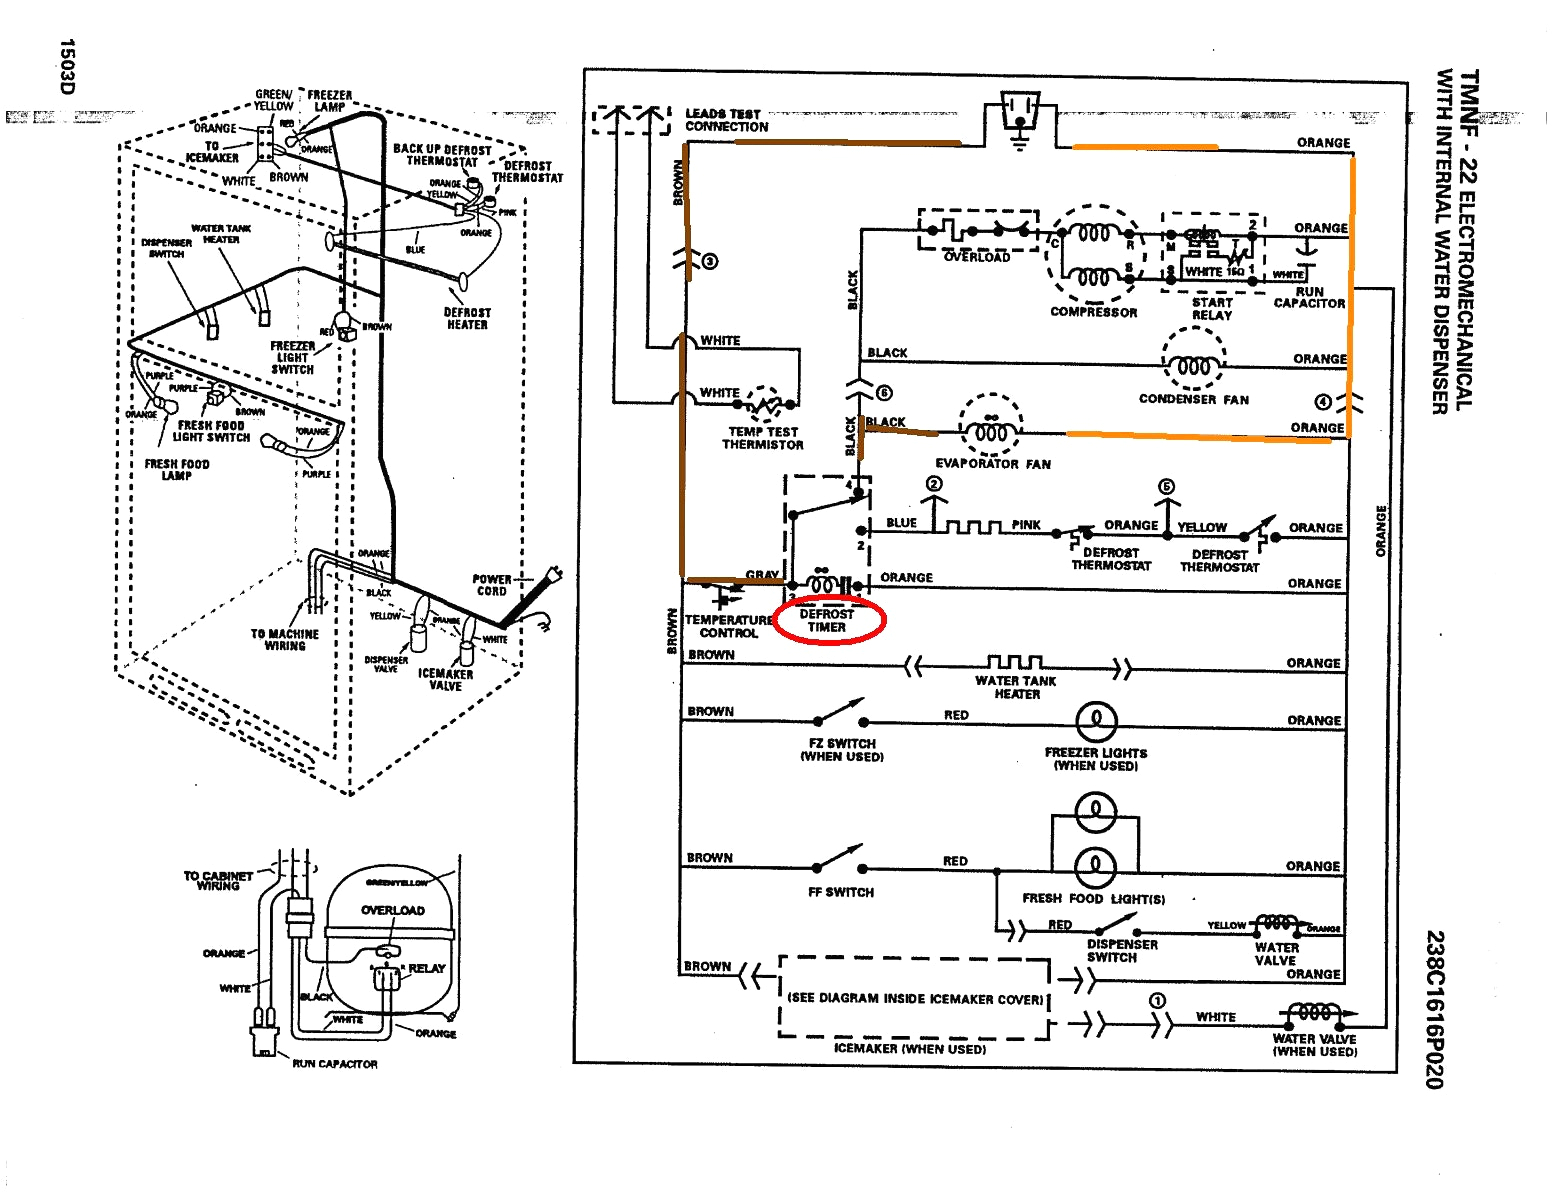 wiring diagram ge profile artica wiring diagram load ge profile arctica wiring diagram wiring diagram technic